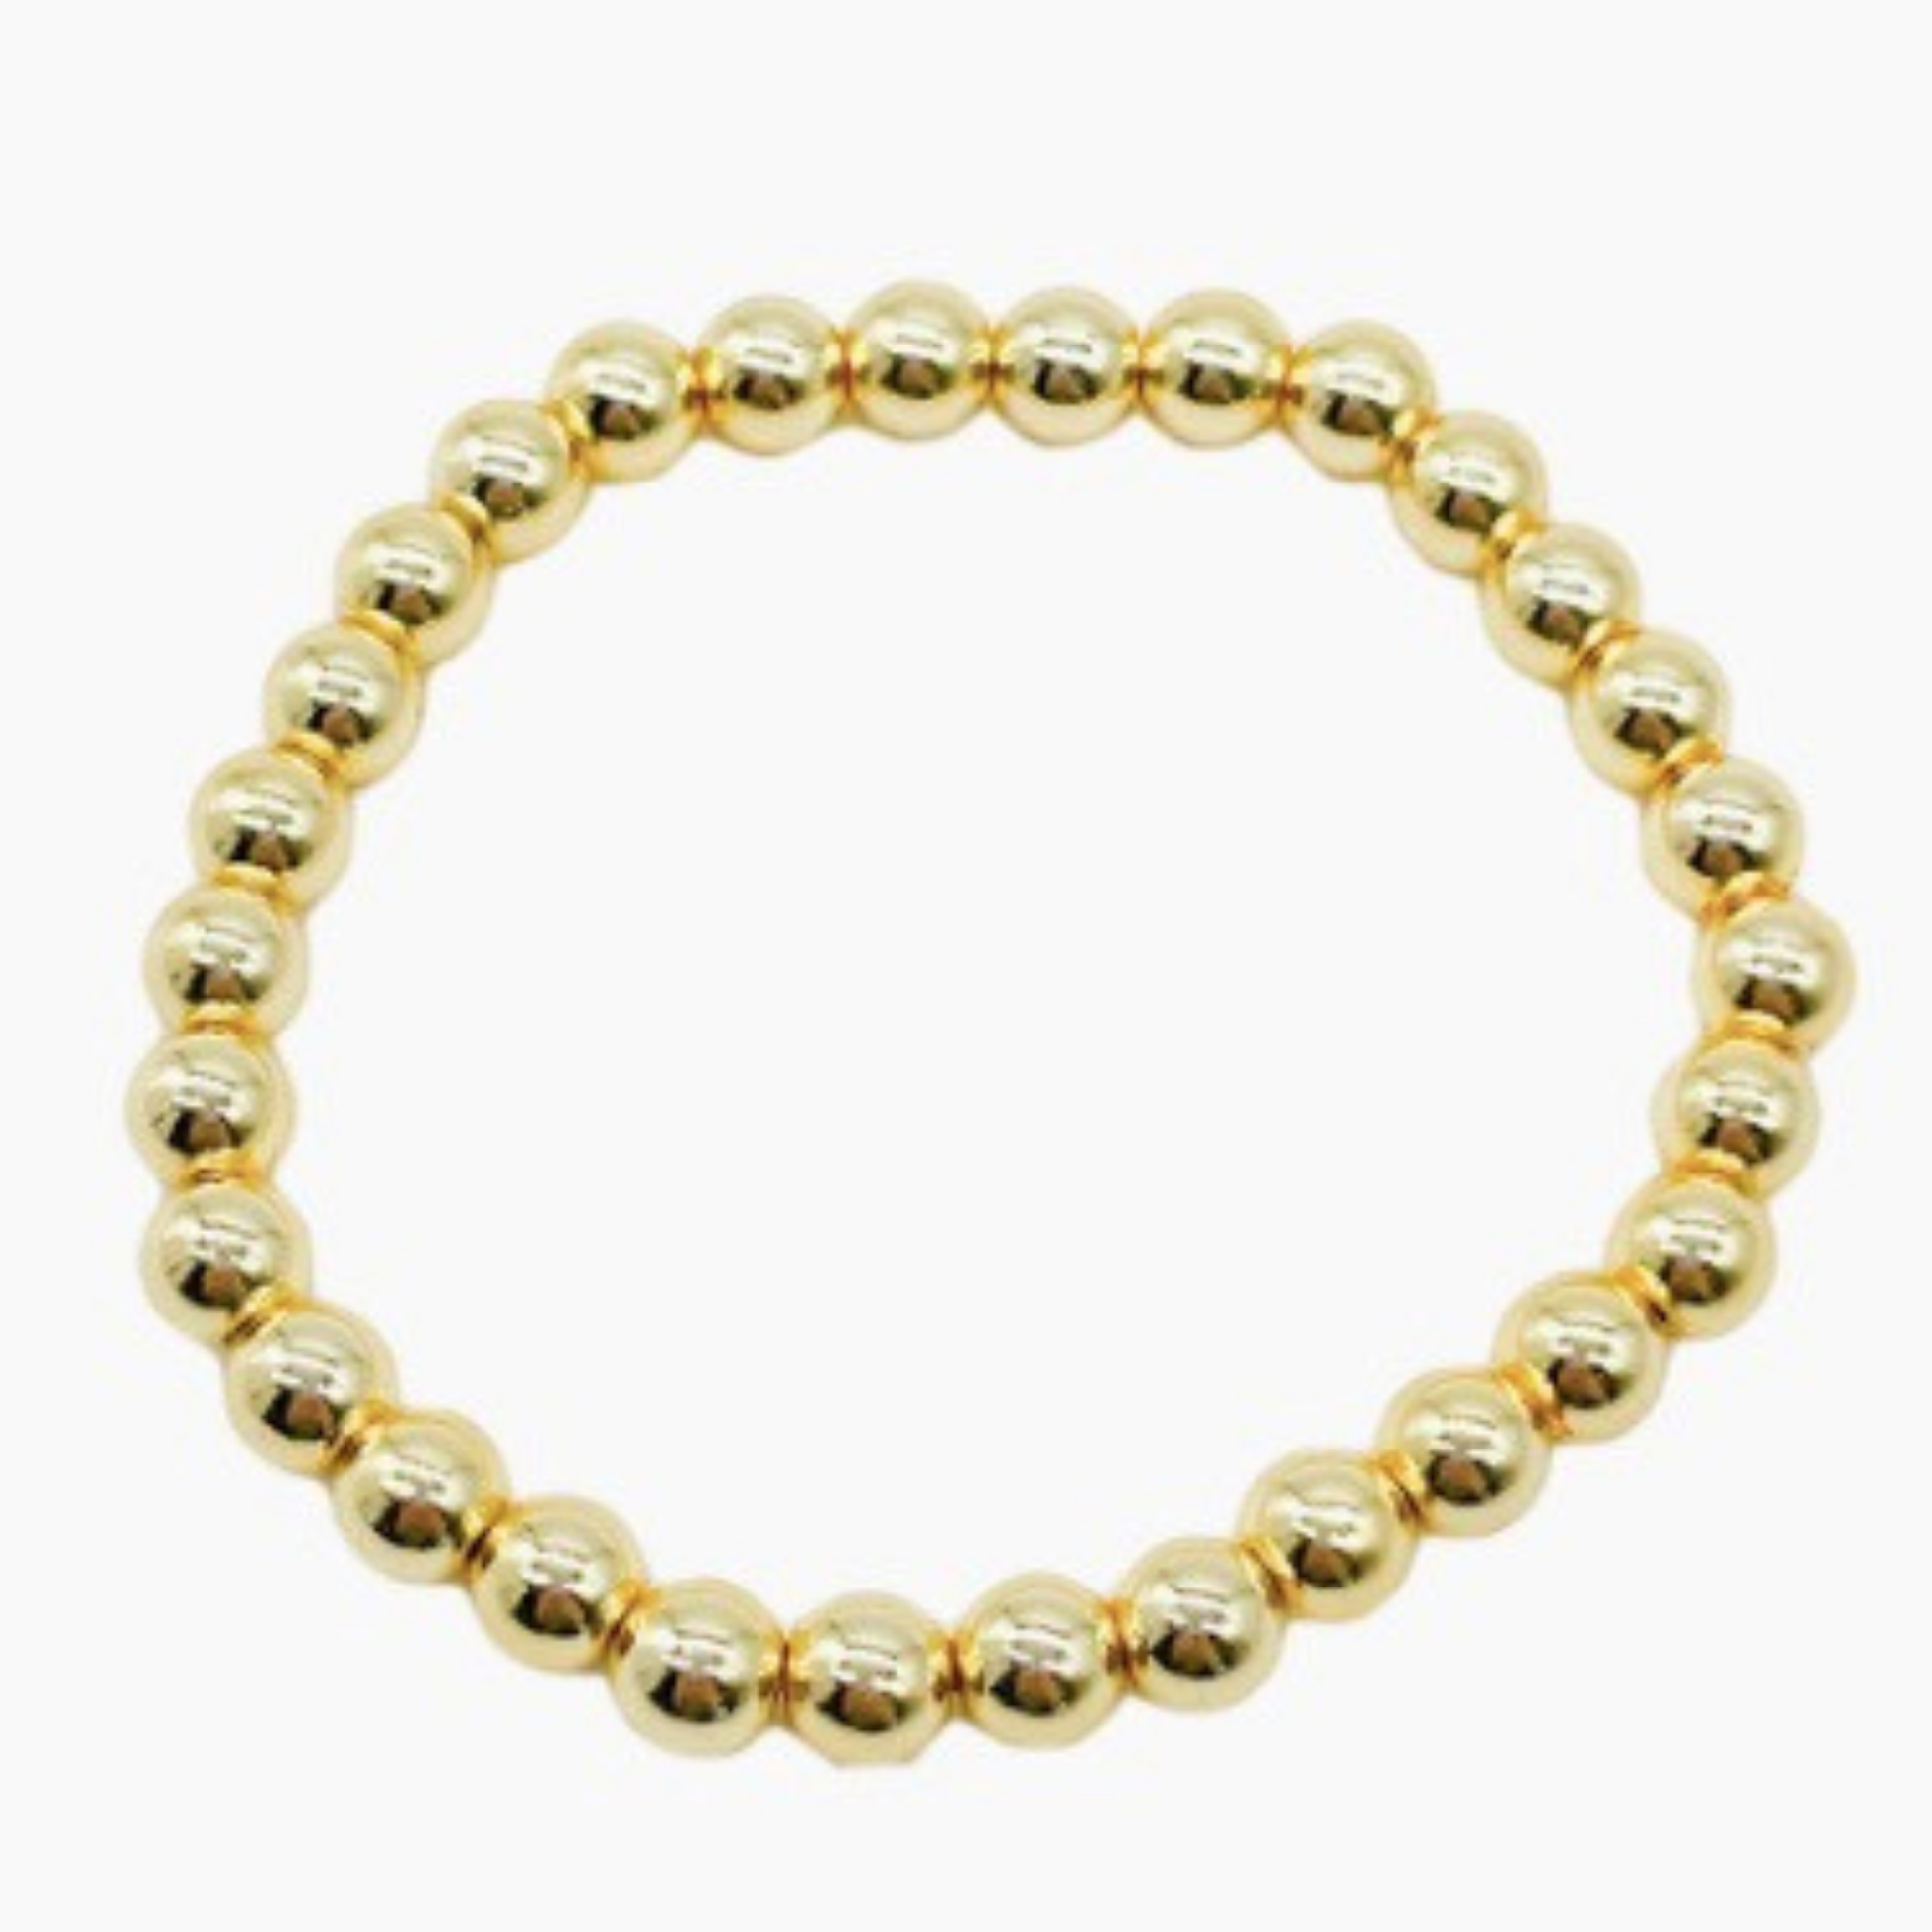 Large bead stretchy gold bracelet